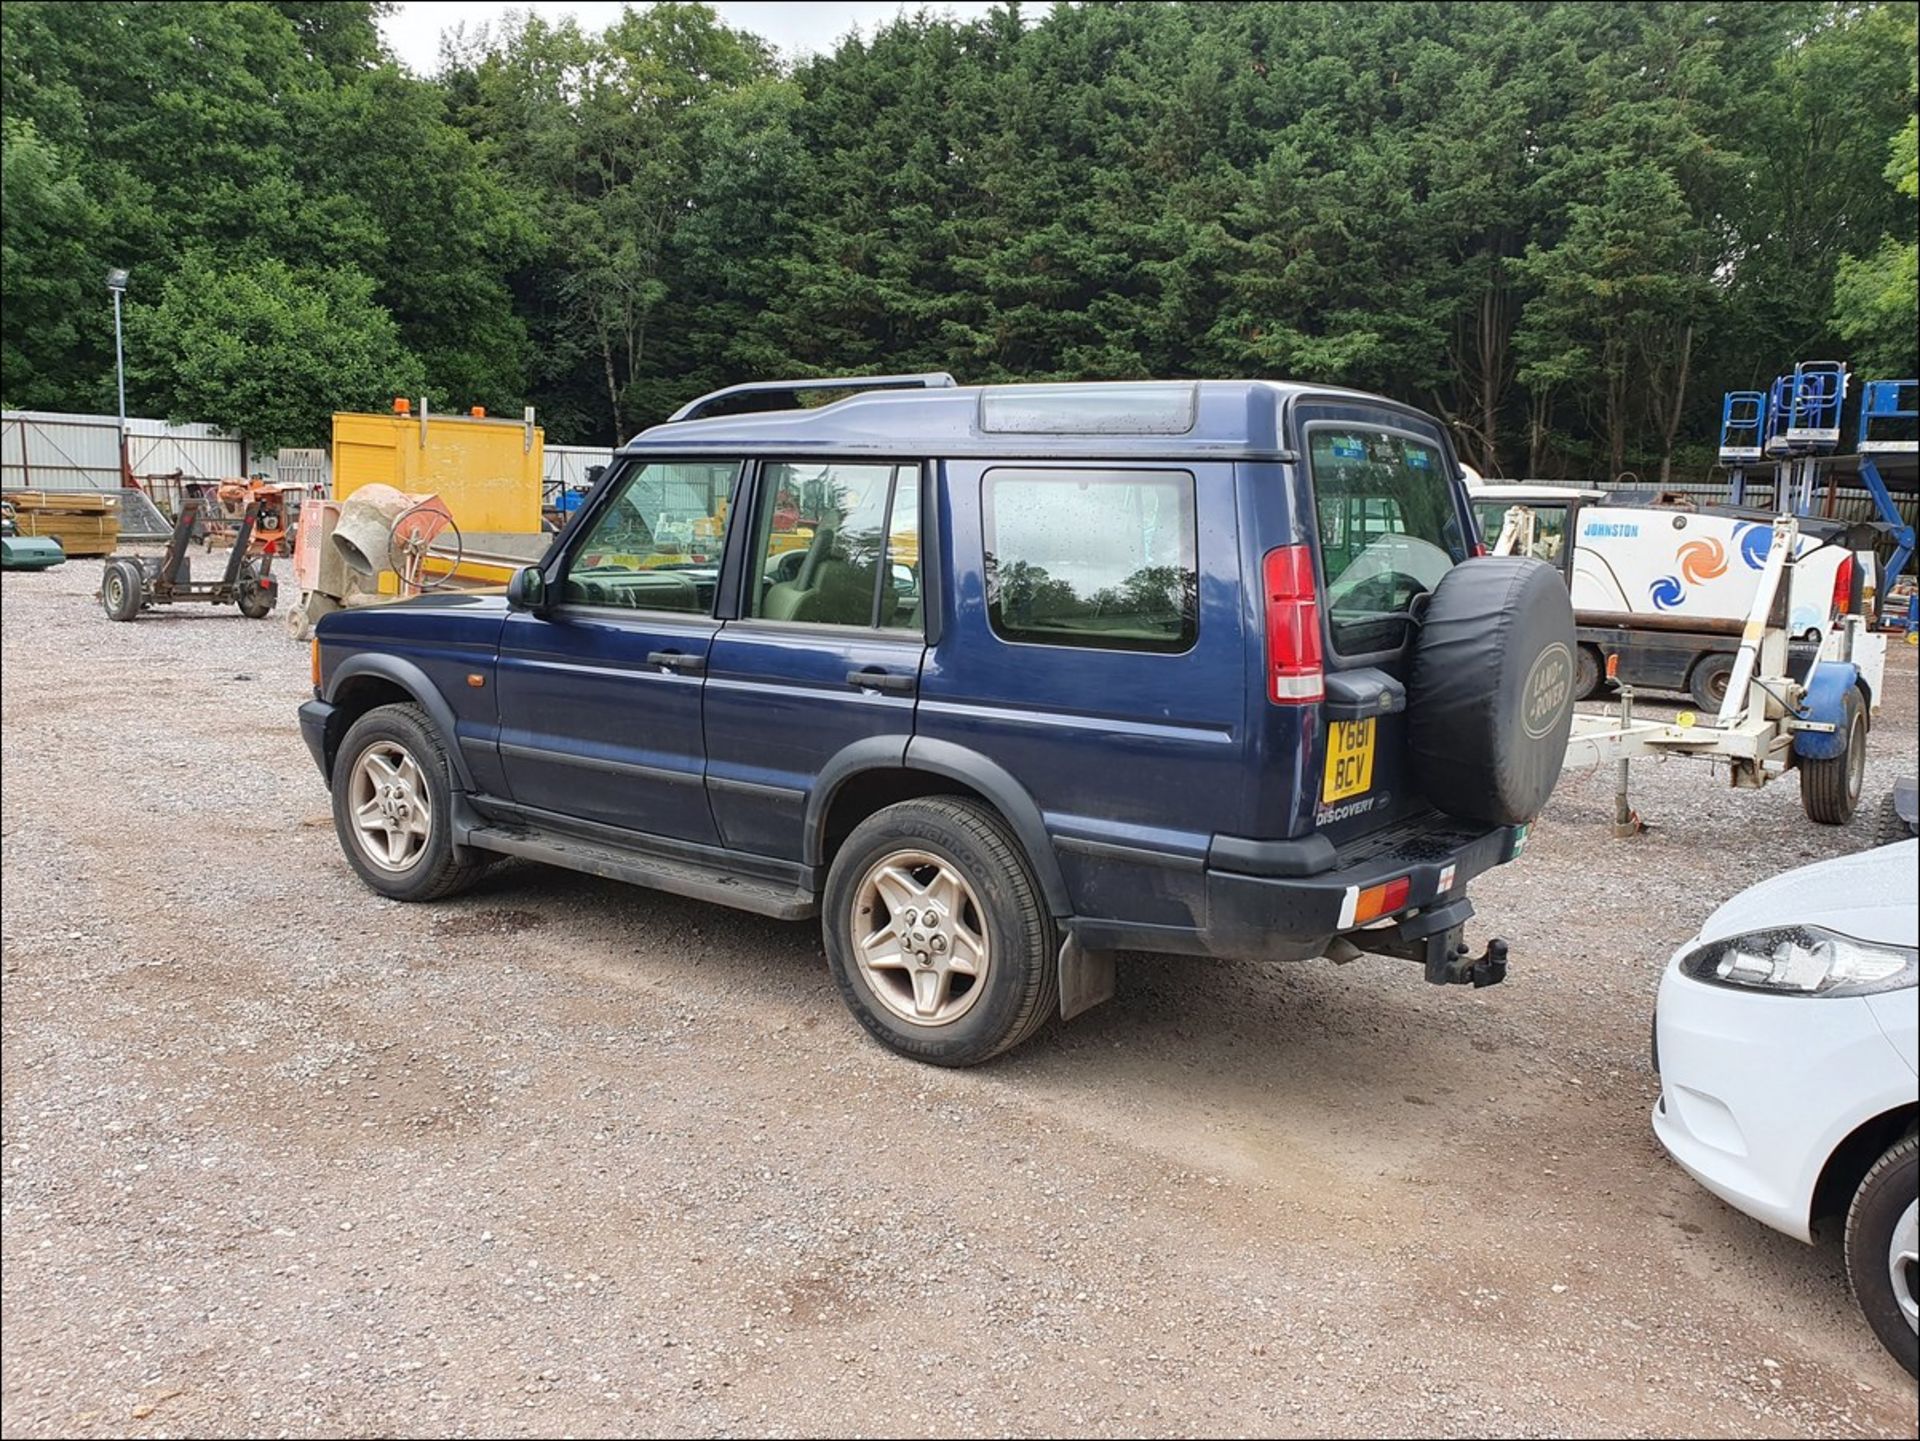 01/Y Land Rover Discovery TD5 ES - 2495cc 5dr Estate (Blue, 143k) - Image 6 of 11